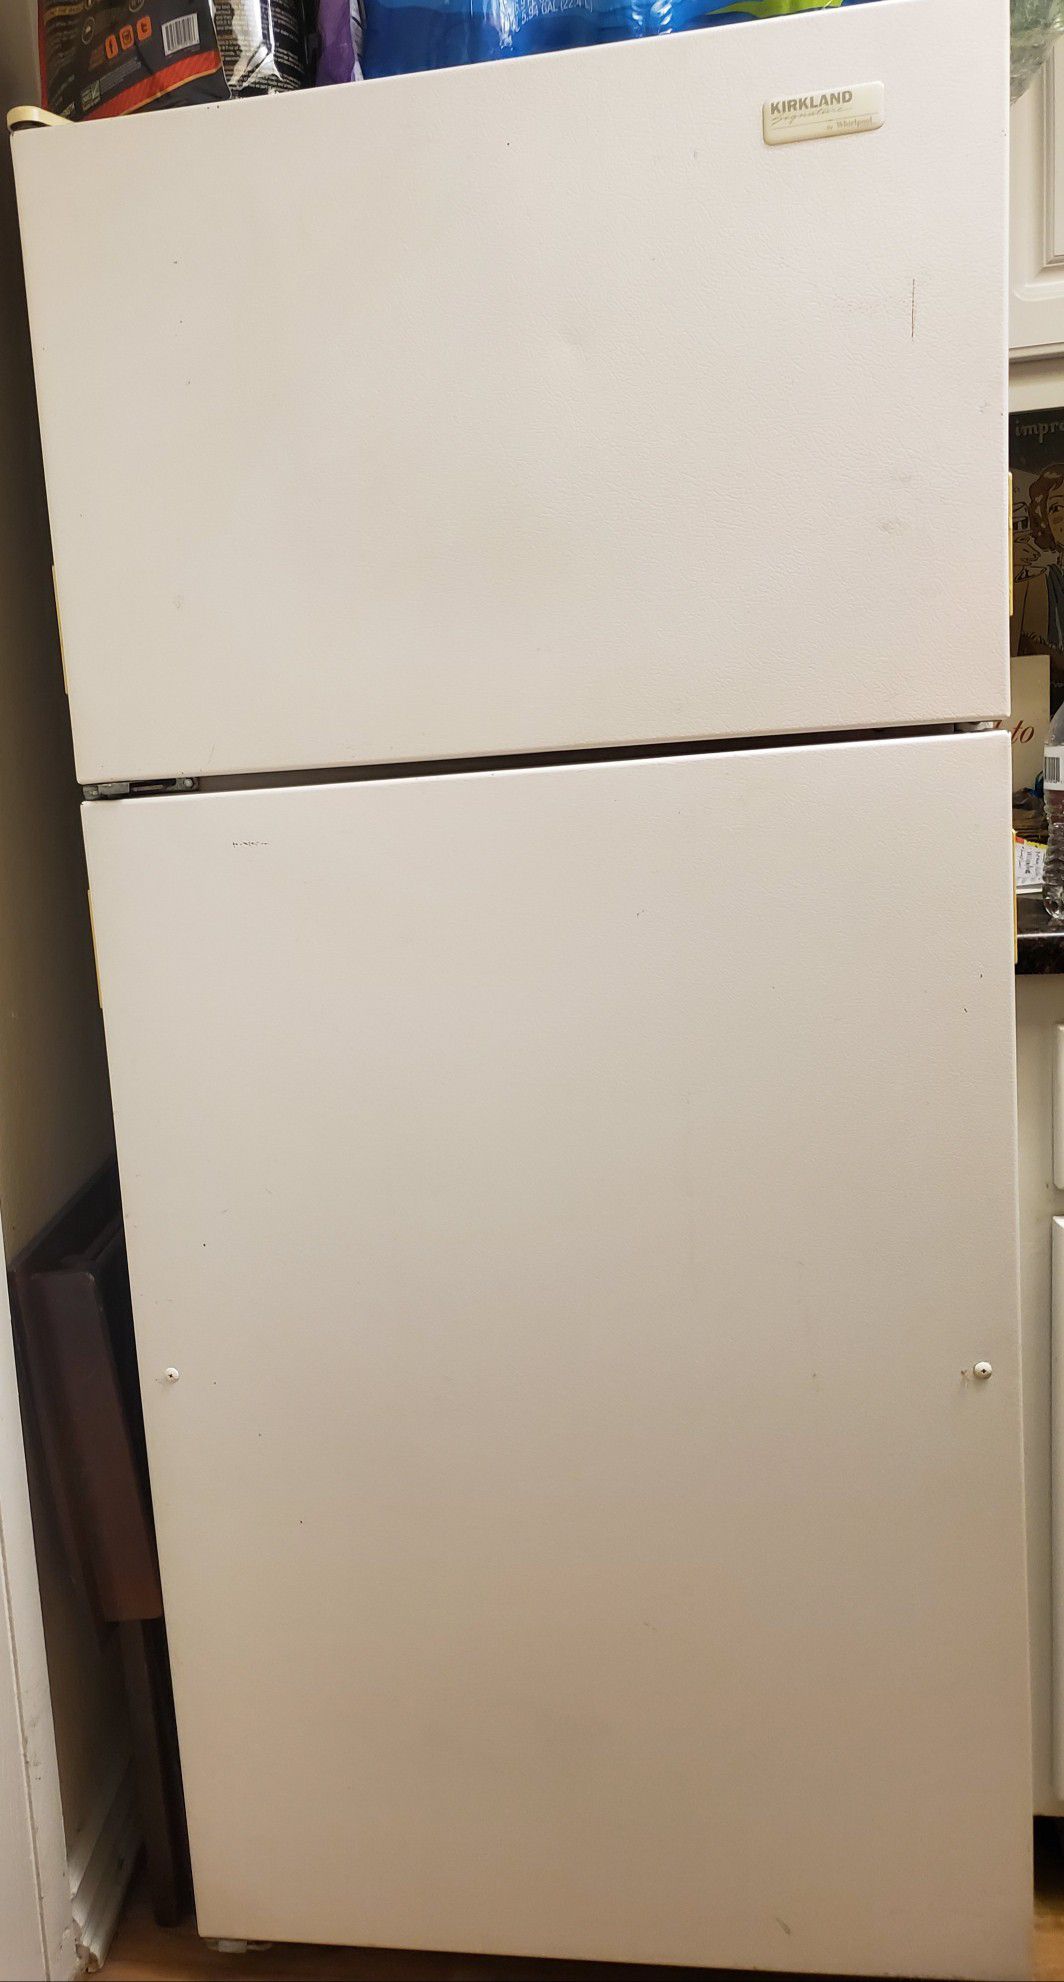 Kirkland refrigerator